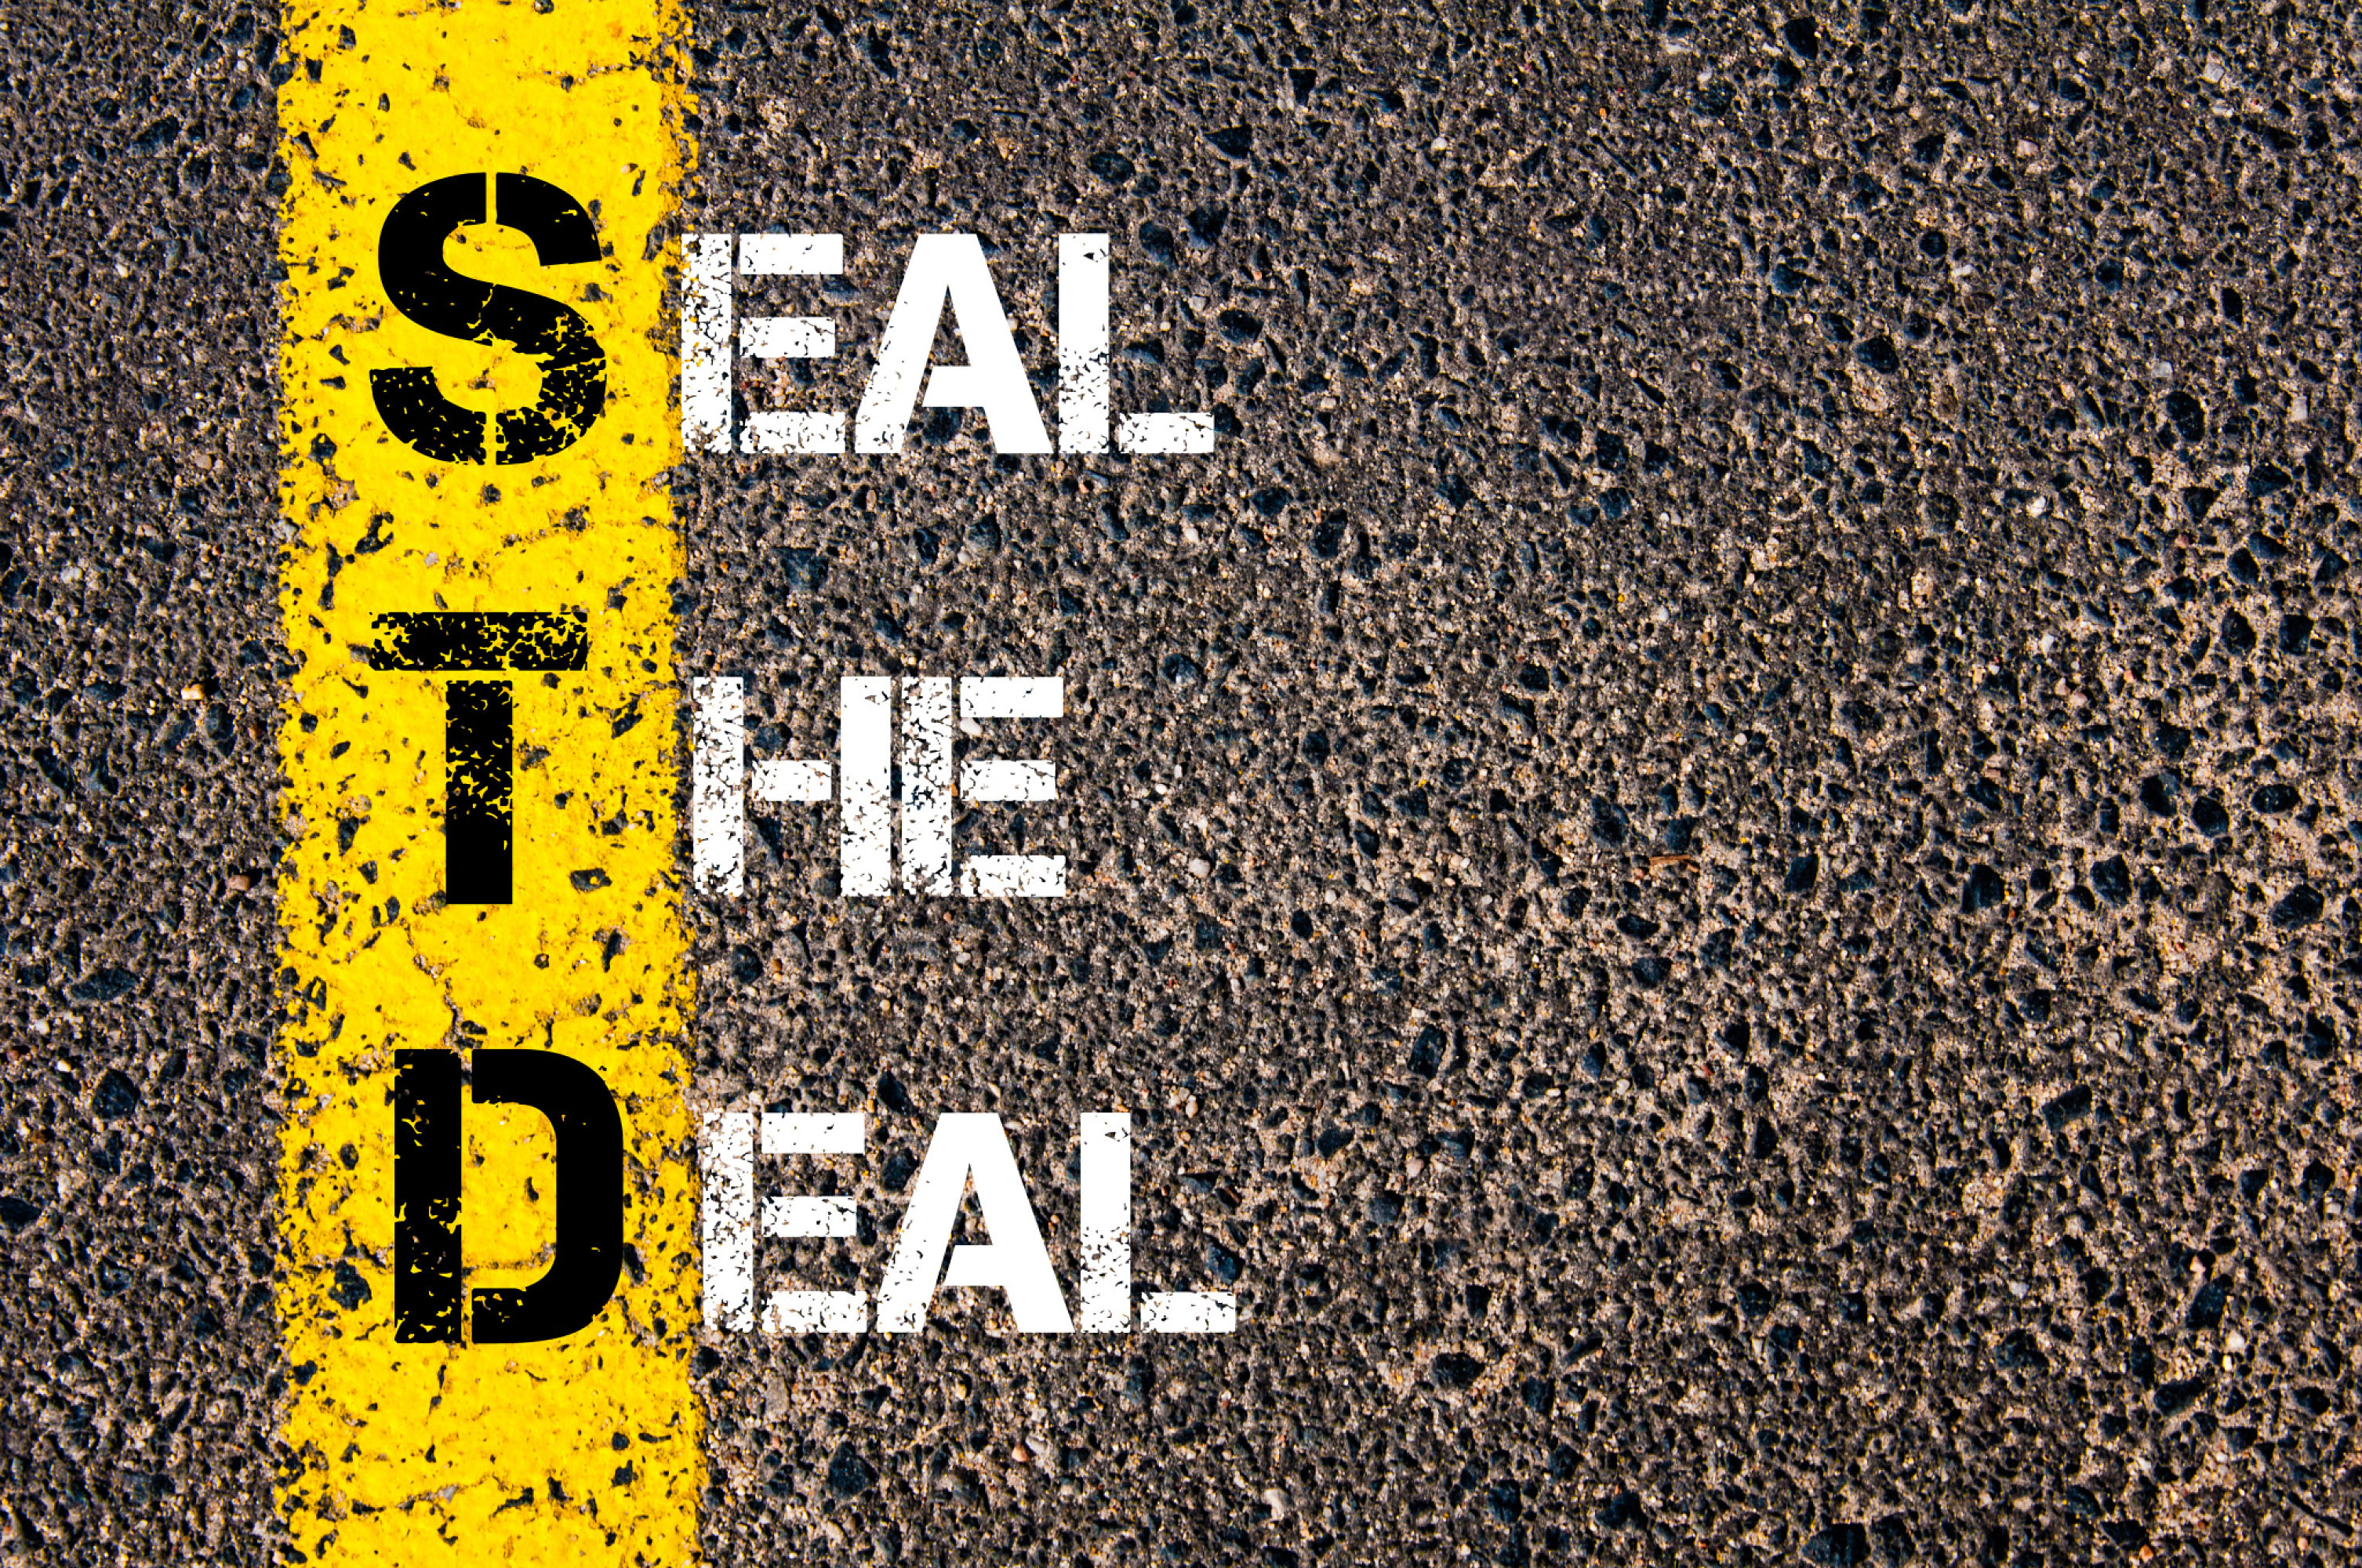 STD Acronym on Asphalt - Seal the Deal